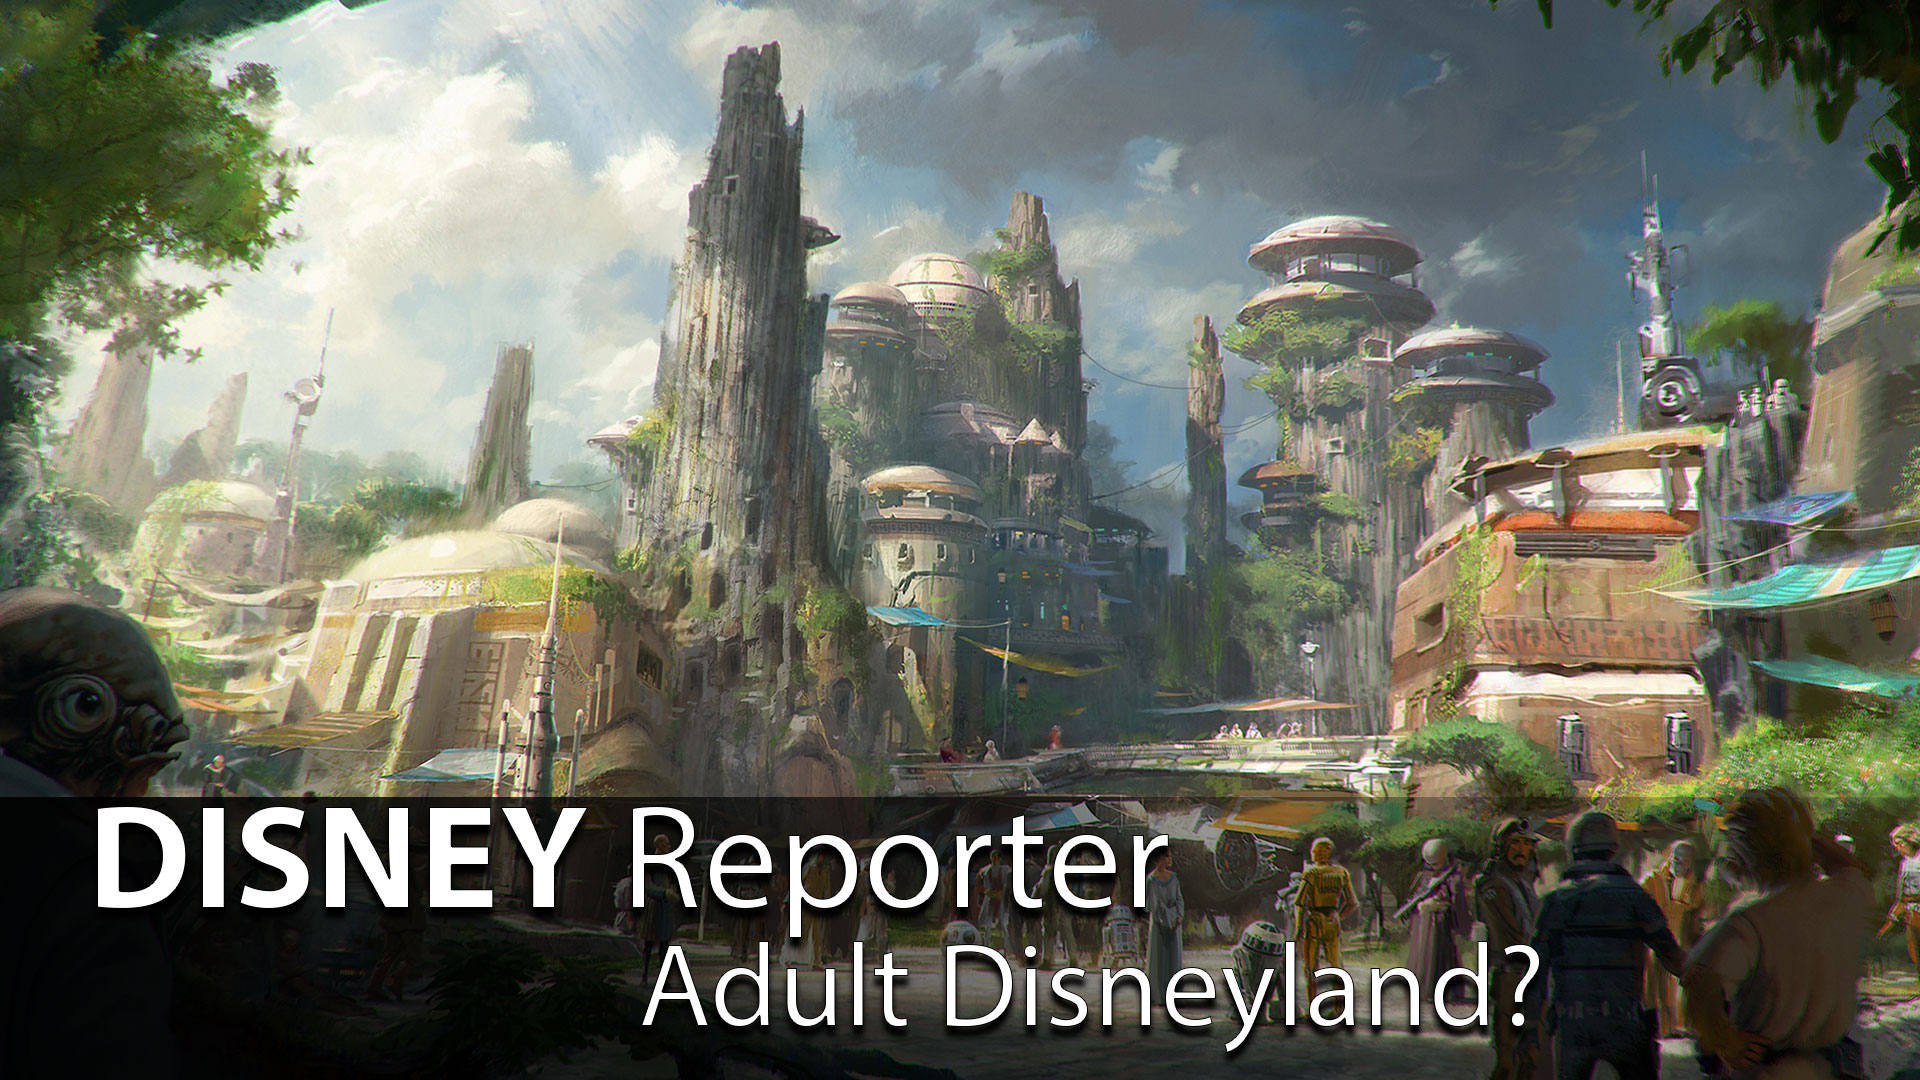 Adult Disneyland? - DISNEY Reporter